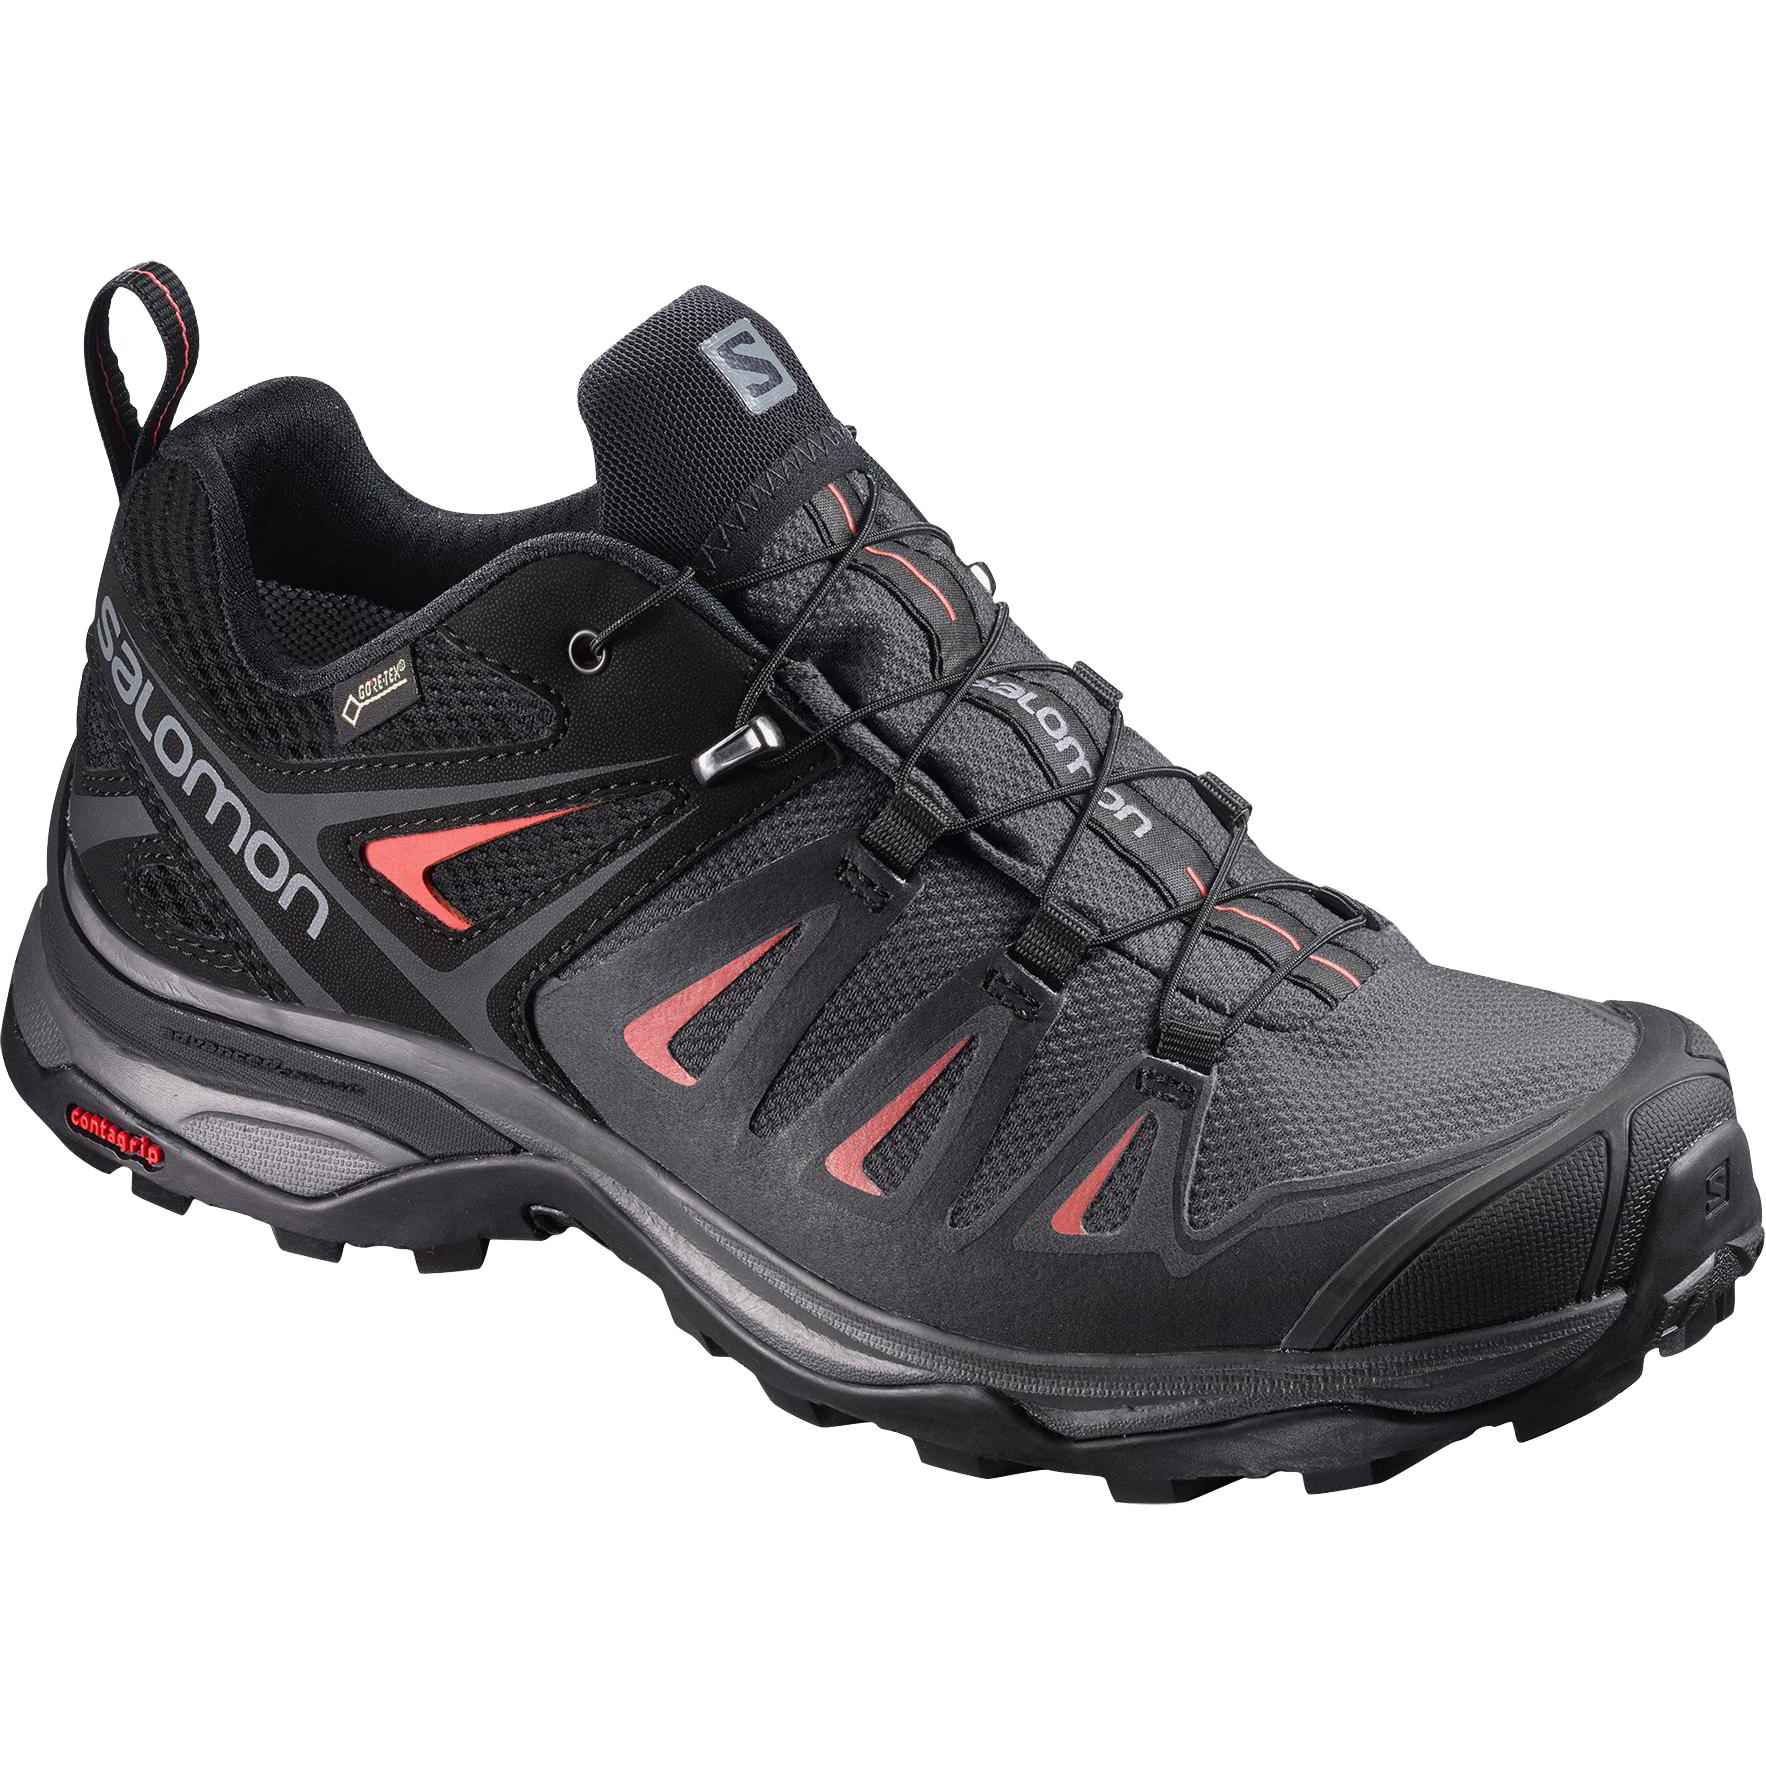 Salomon Womens X Ultra 3 GTX Waterproof Walking Hiking Trainers Shoes - UK 5 Black 2951